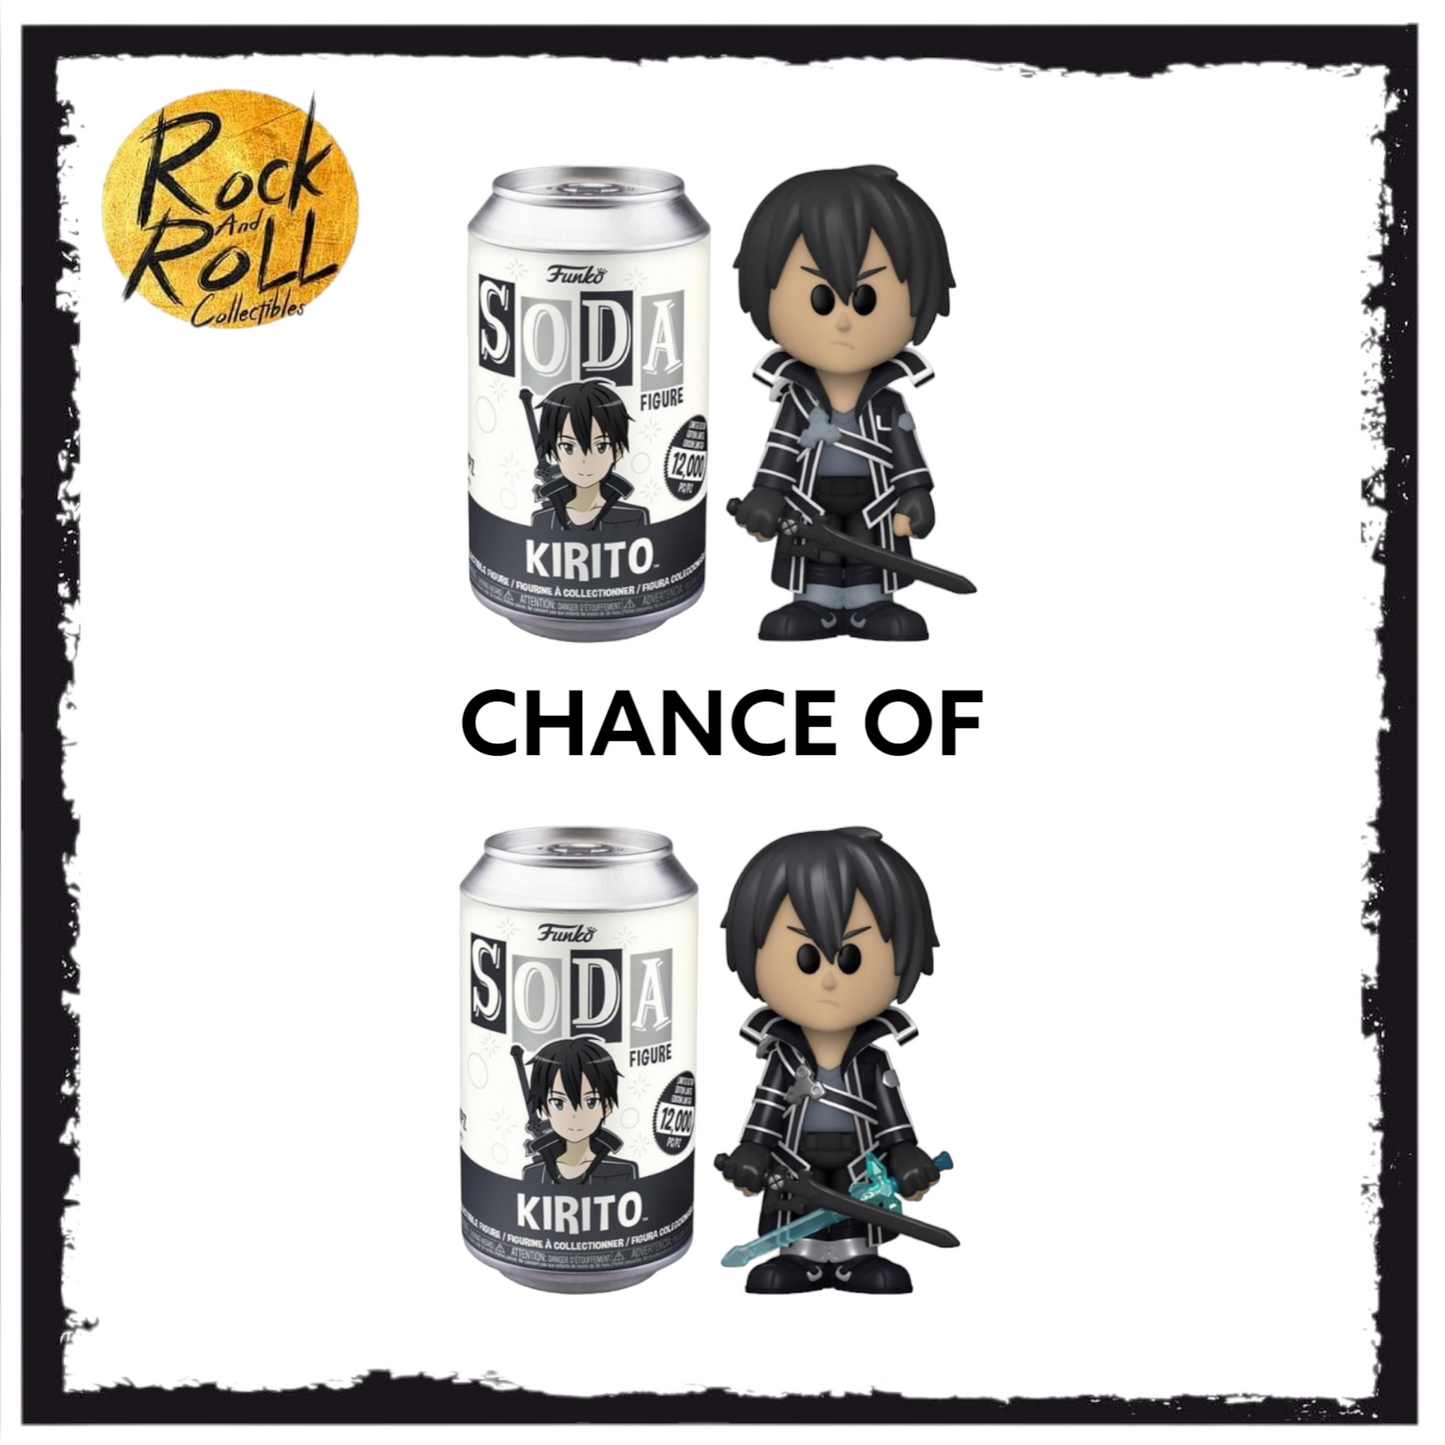 Funko Soda - Kirito 12,000pcs LE - Chance of Chase